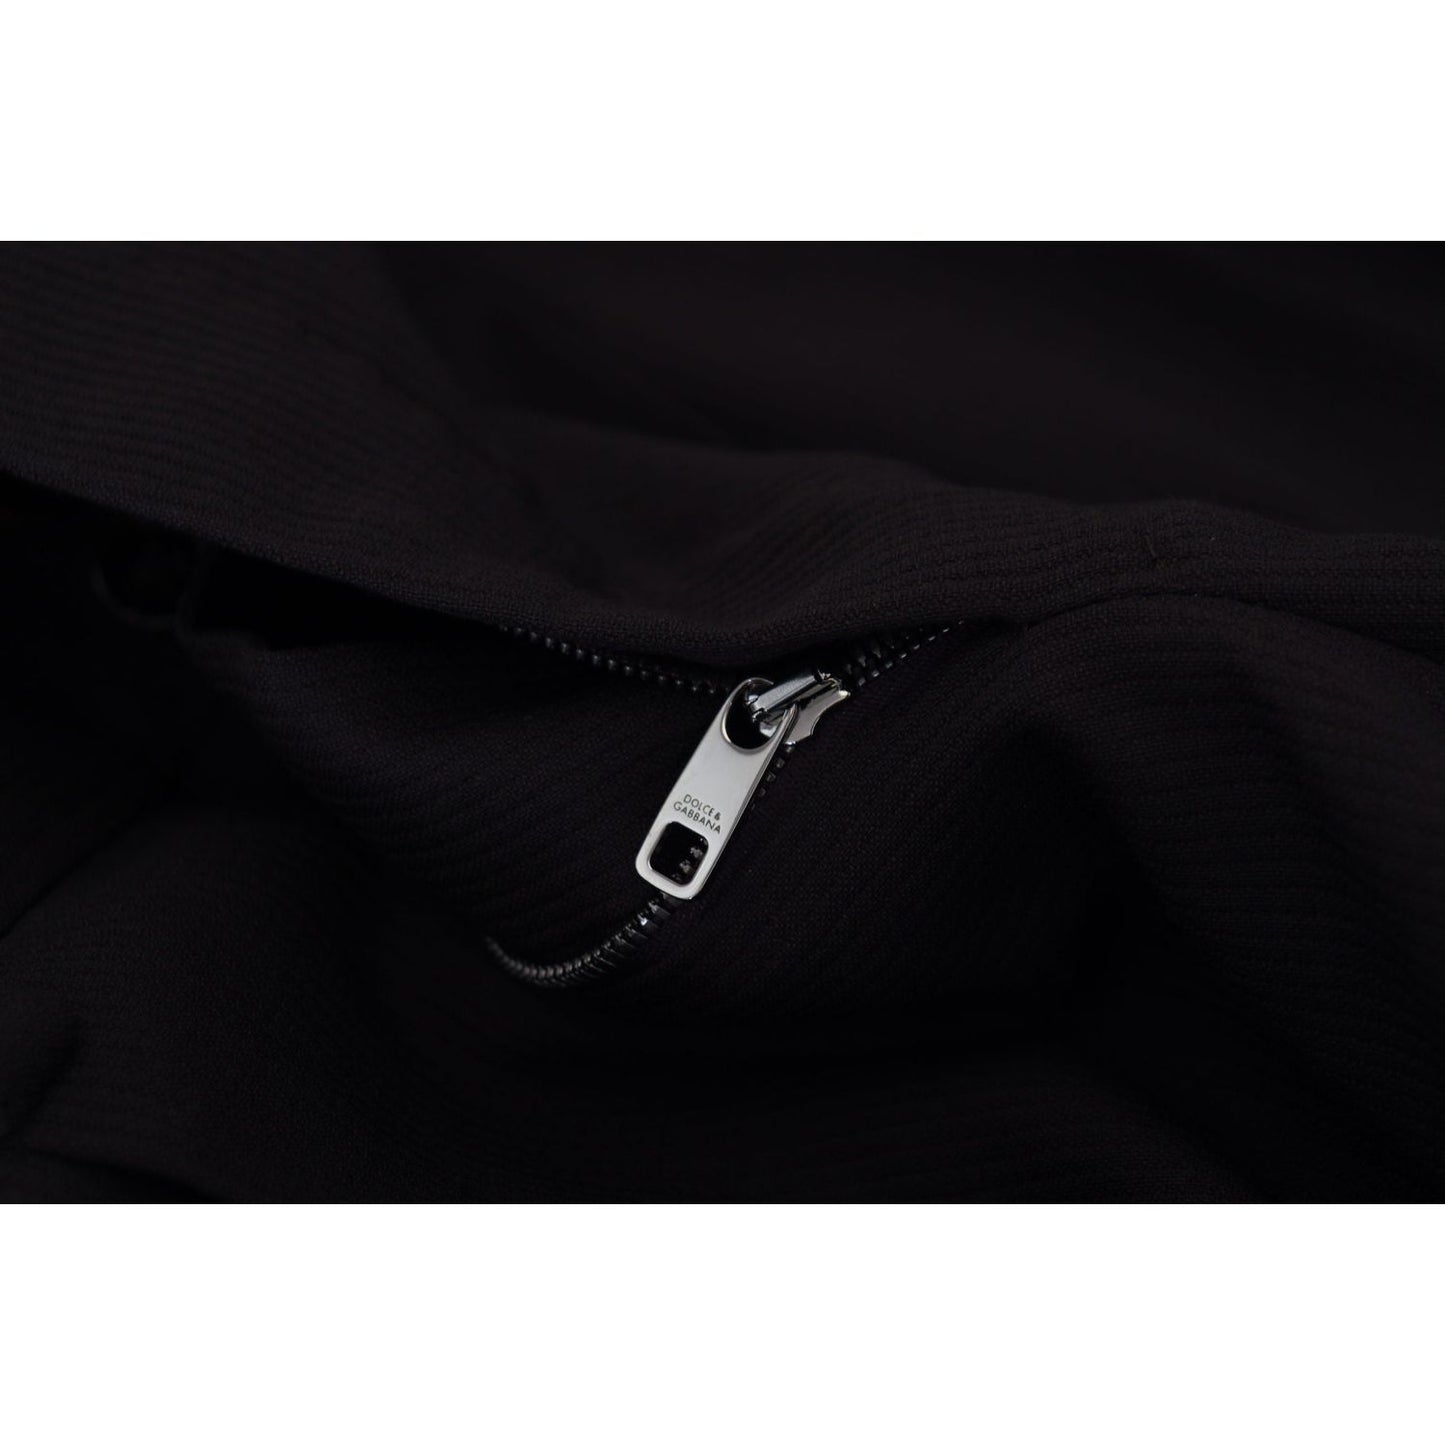 Dolce & Gabbana Elegant Black Virgin Wool Trousers black-wool-chino-men-formal-pants